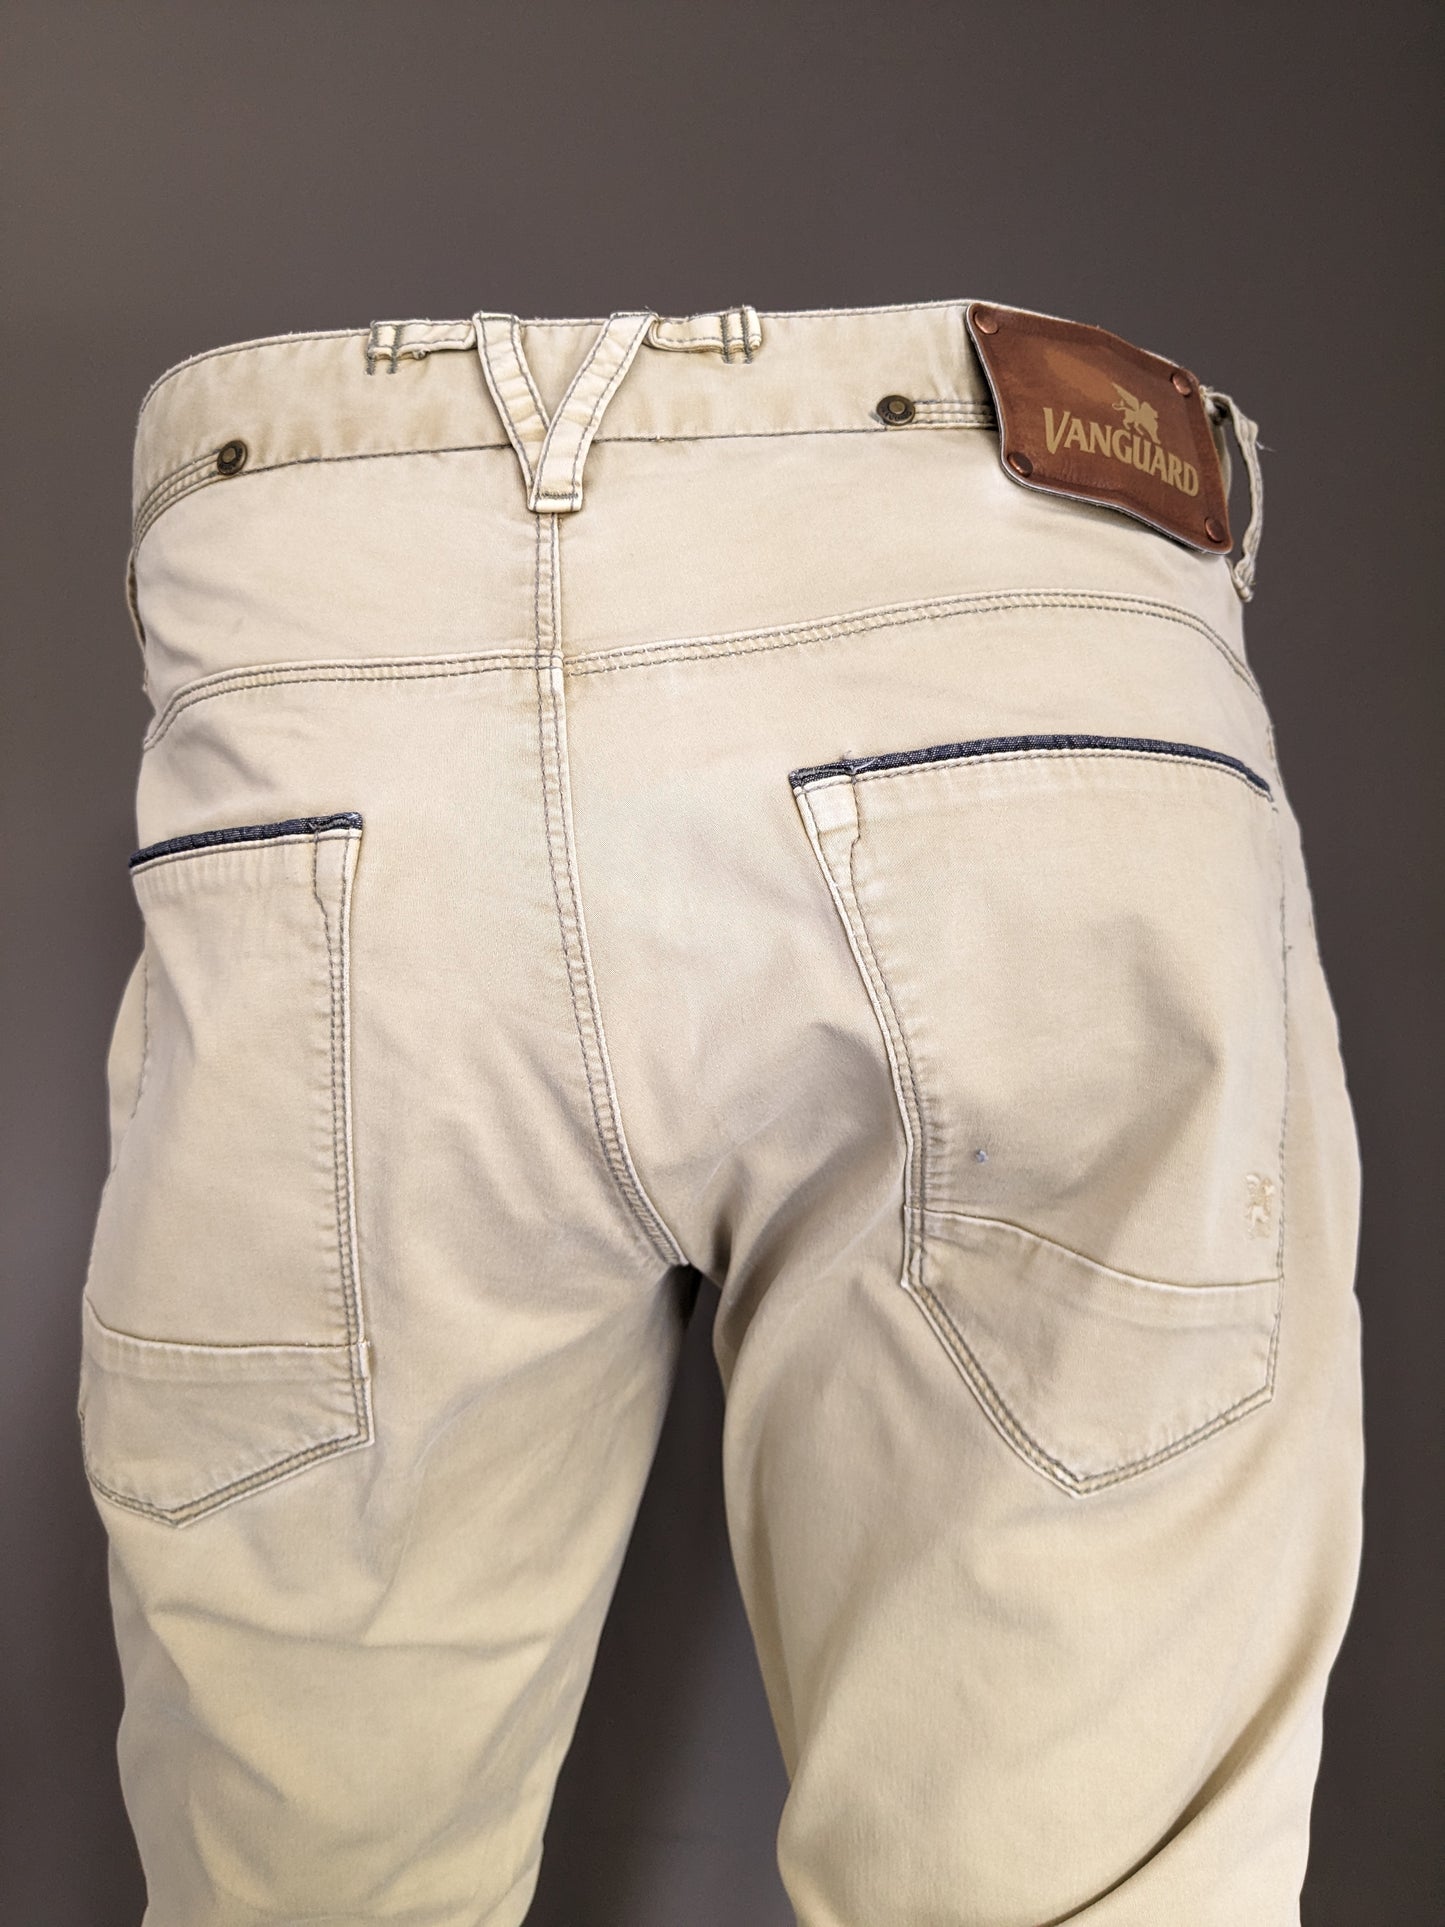 Vanguard pants. Beige colored. Size W31 - L32.